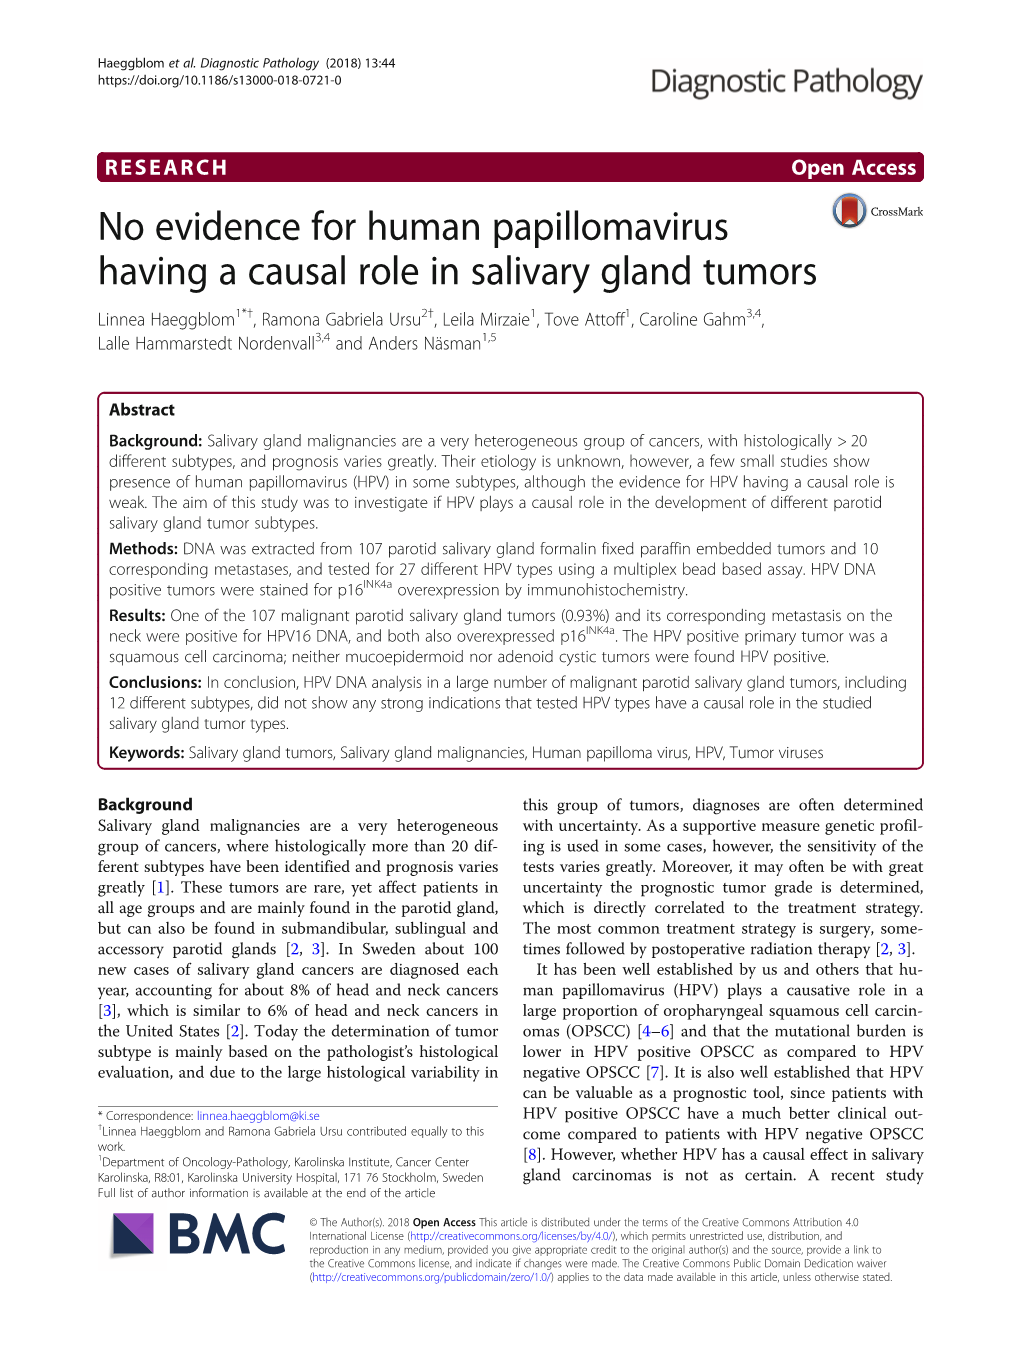 No Evidence for Human Papillomavirus Having a Causal Role